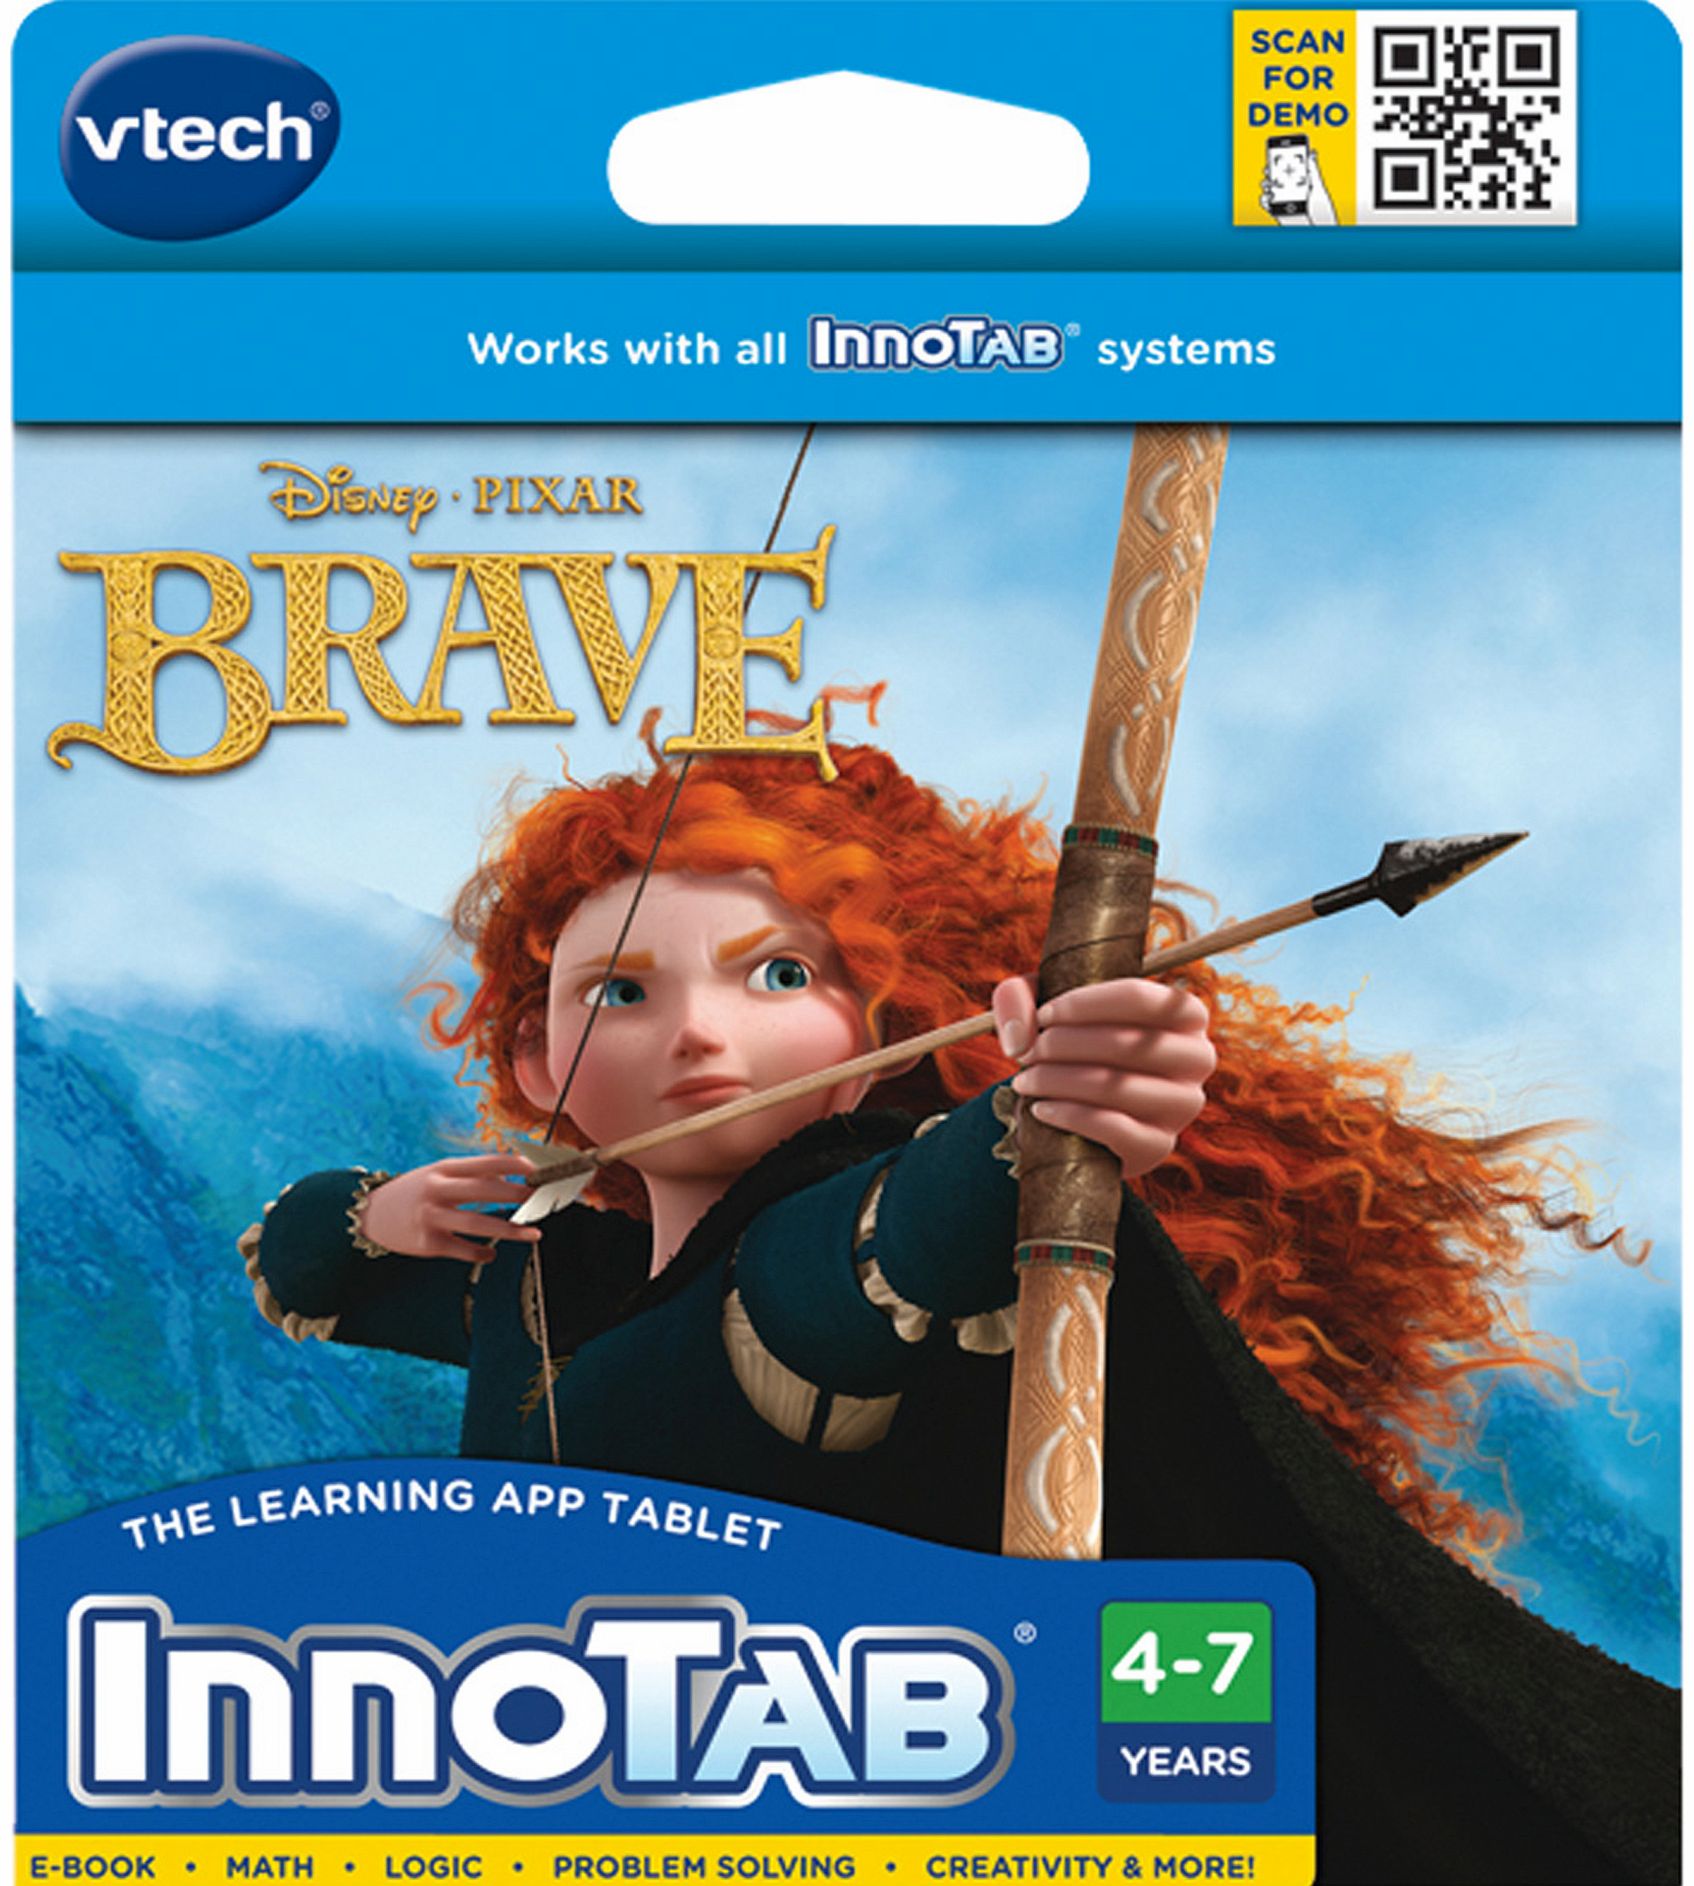 Vtech Innotab Software - Disney Princess Brave